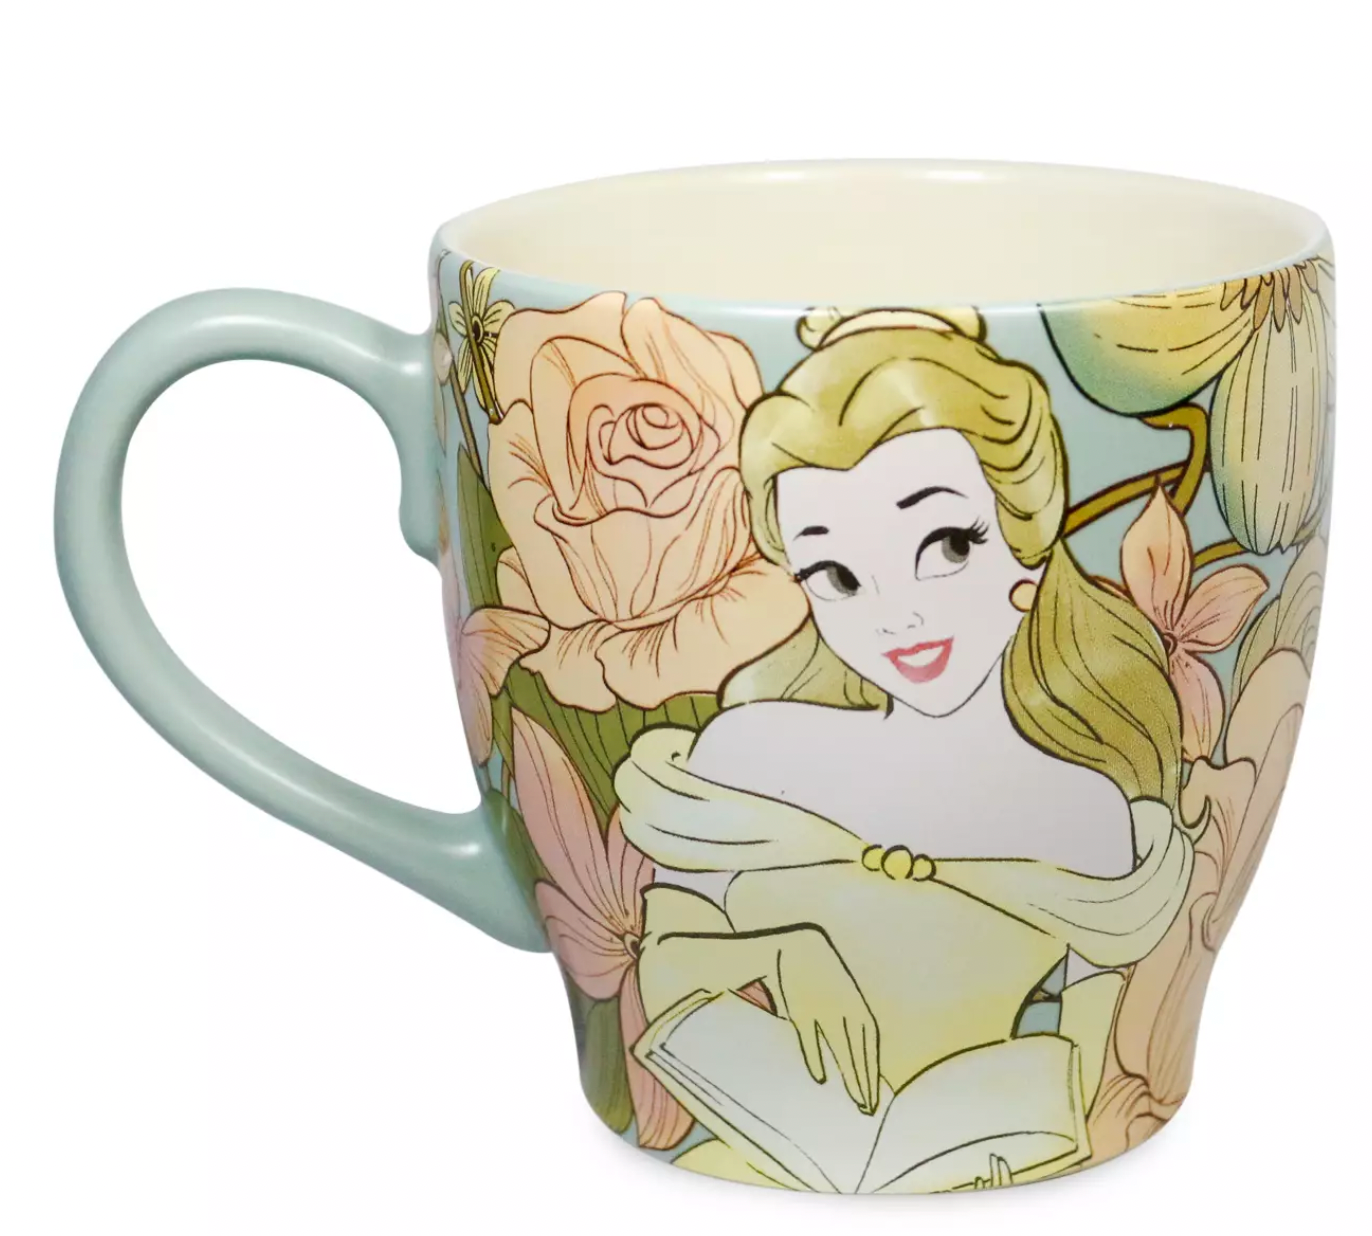 Disney Belle Enchanted Beauty Beauty and the Beast Coffee Mug New